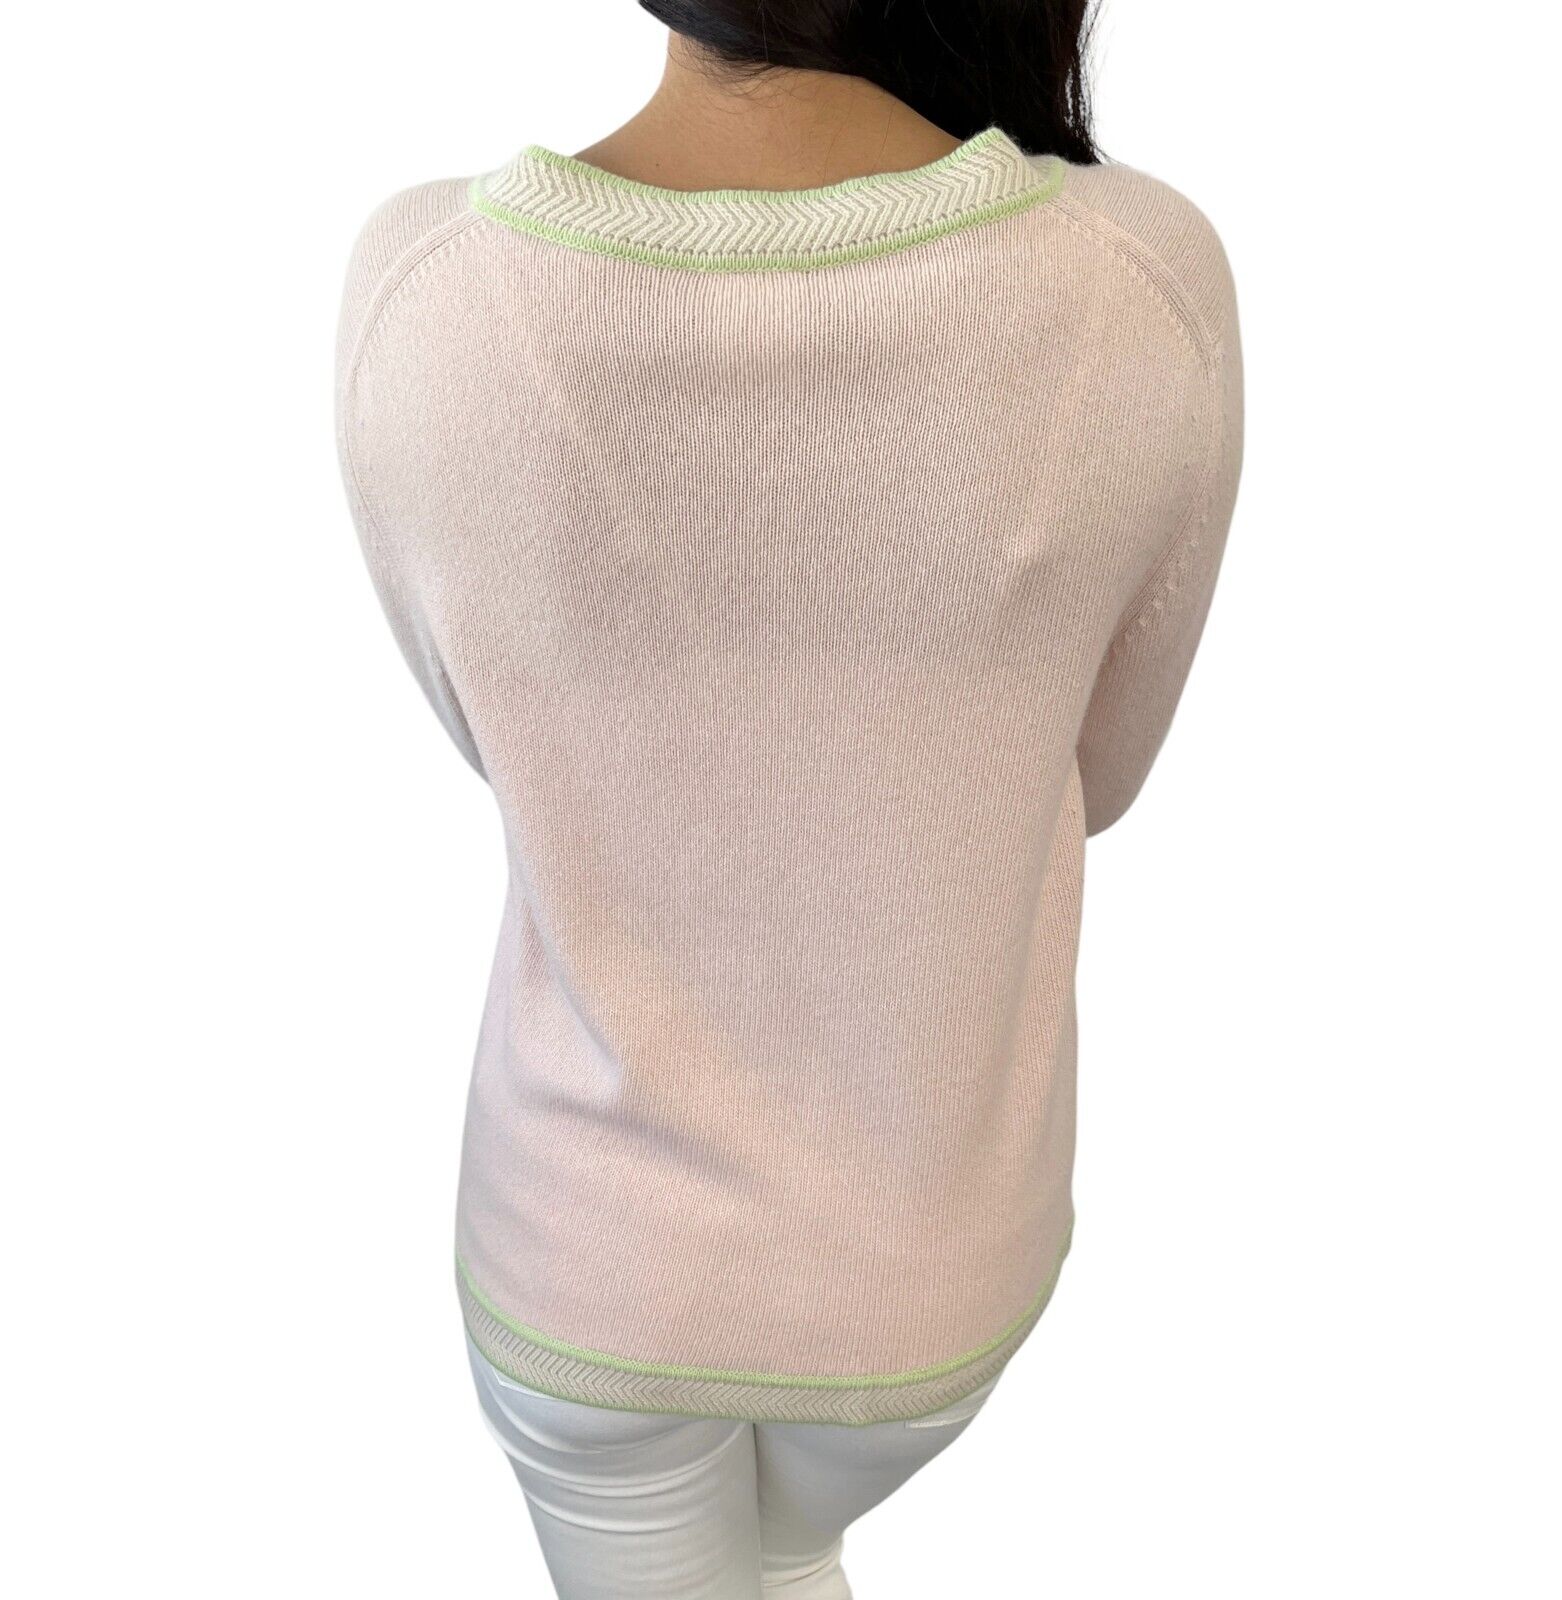 CHANEL Vintage 03P Logo Cardigan #42 Pink Green Sweater Cashmere Button RankAB+